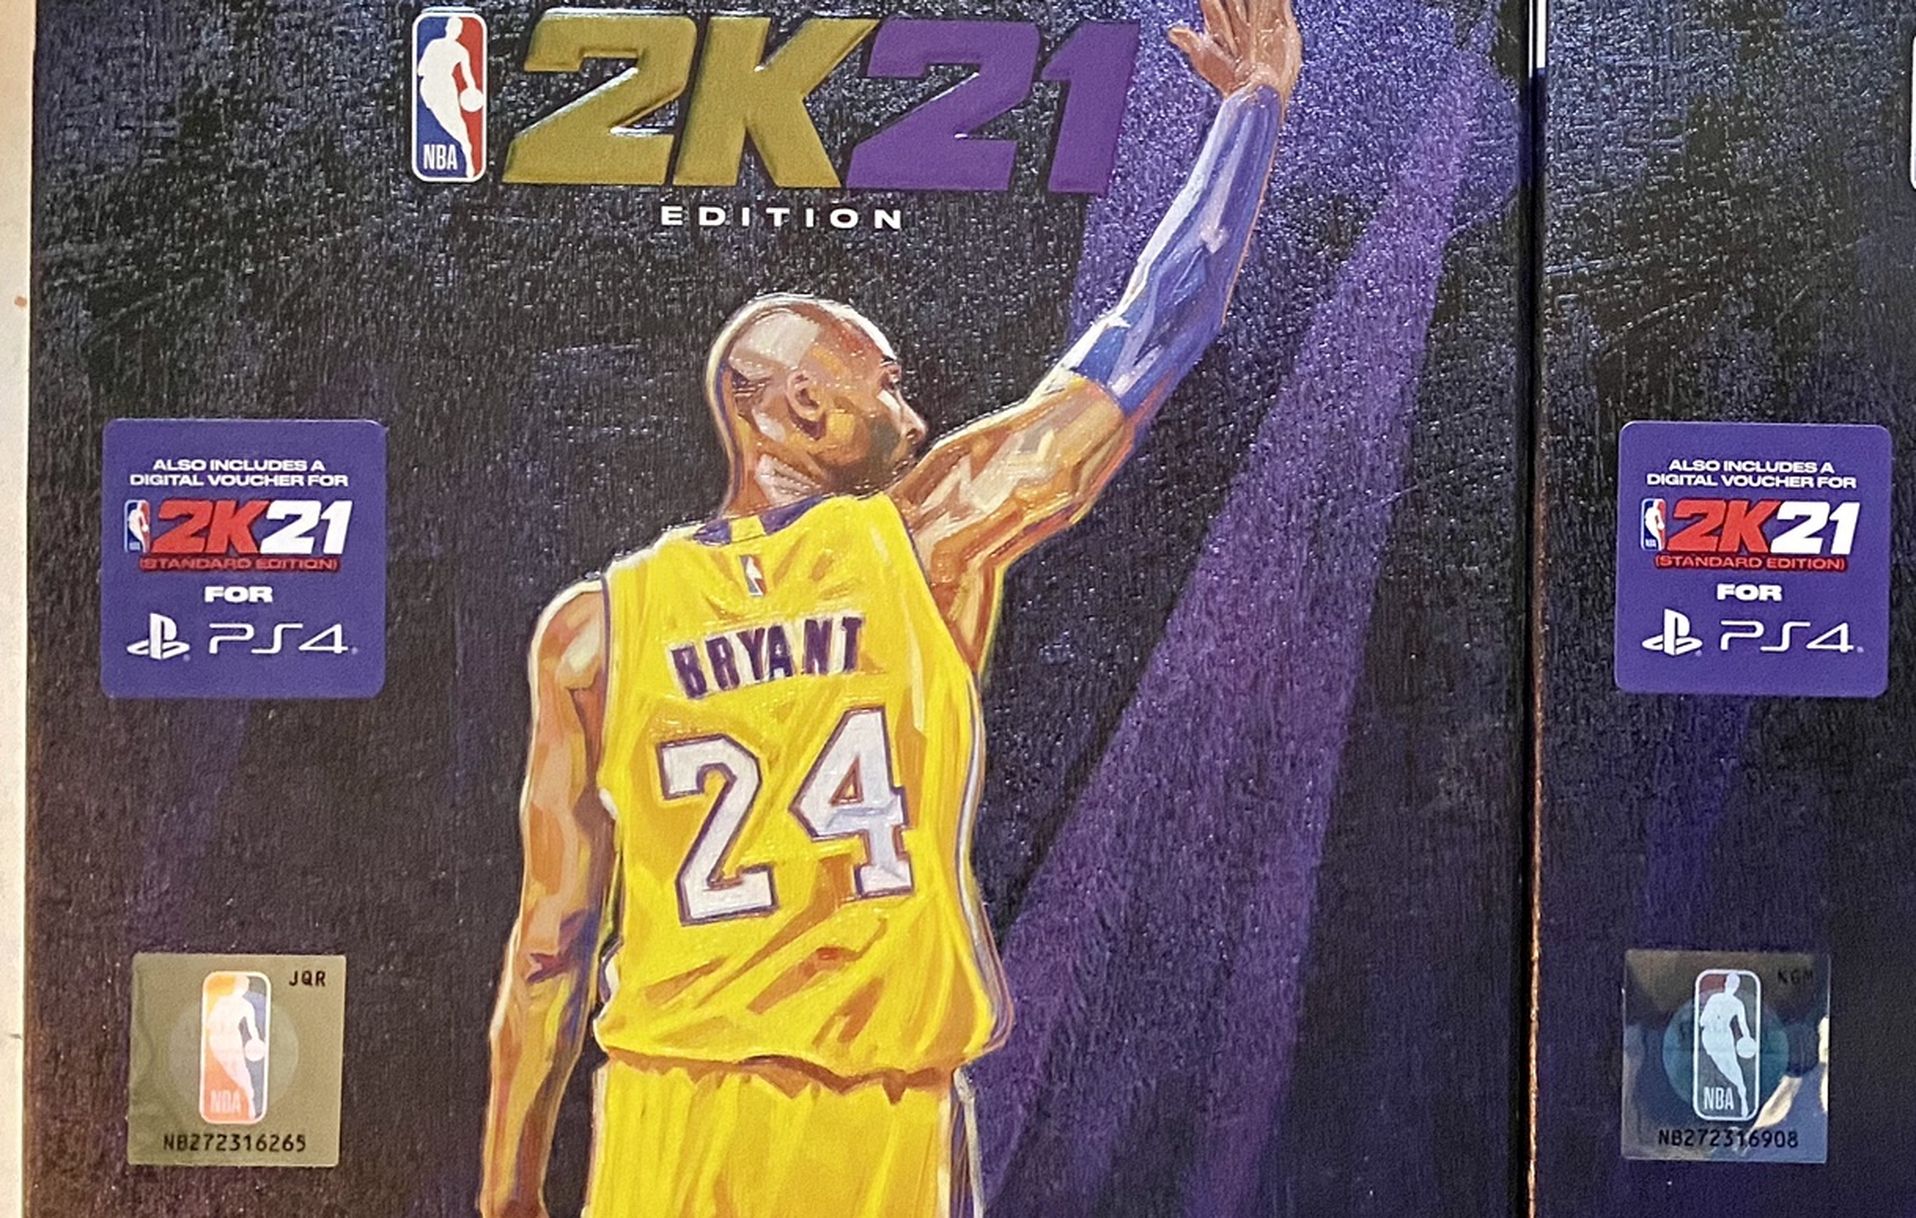 PS5 NBA 2K21 (Mamba Forever Edition)